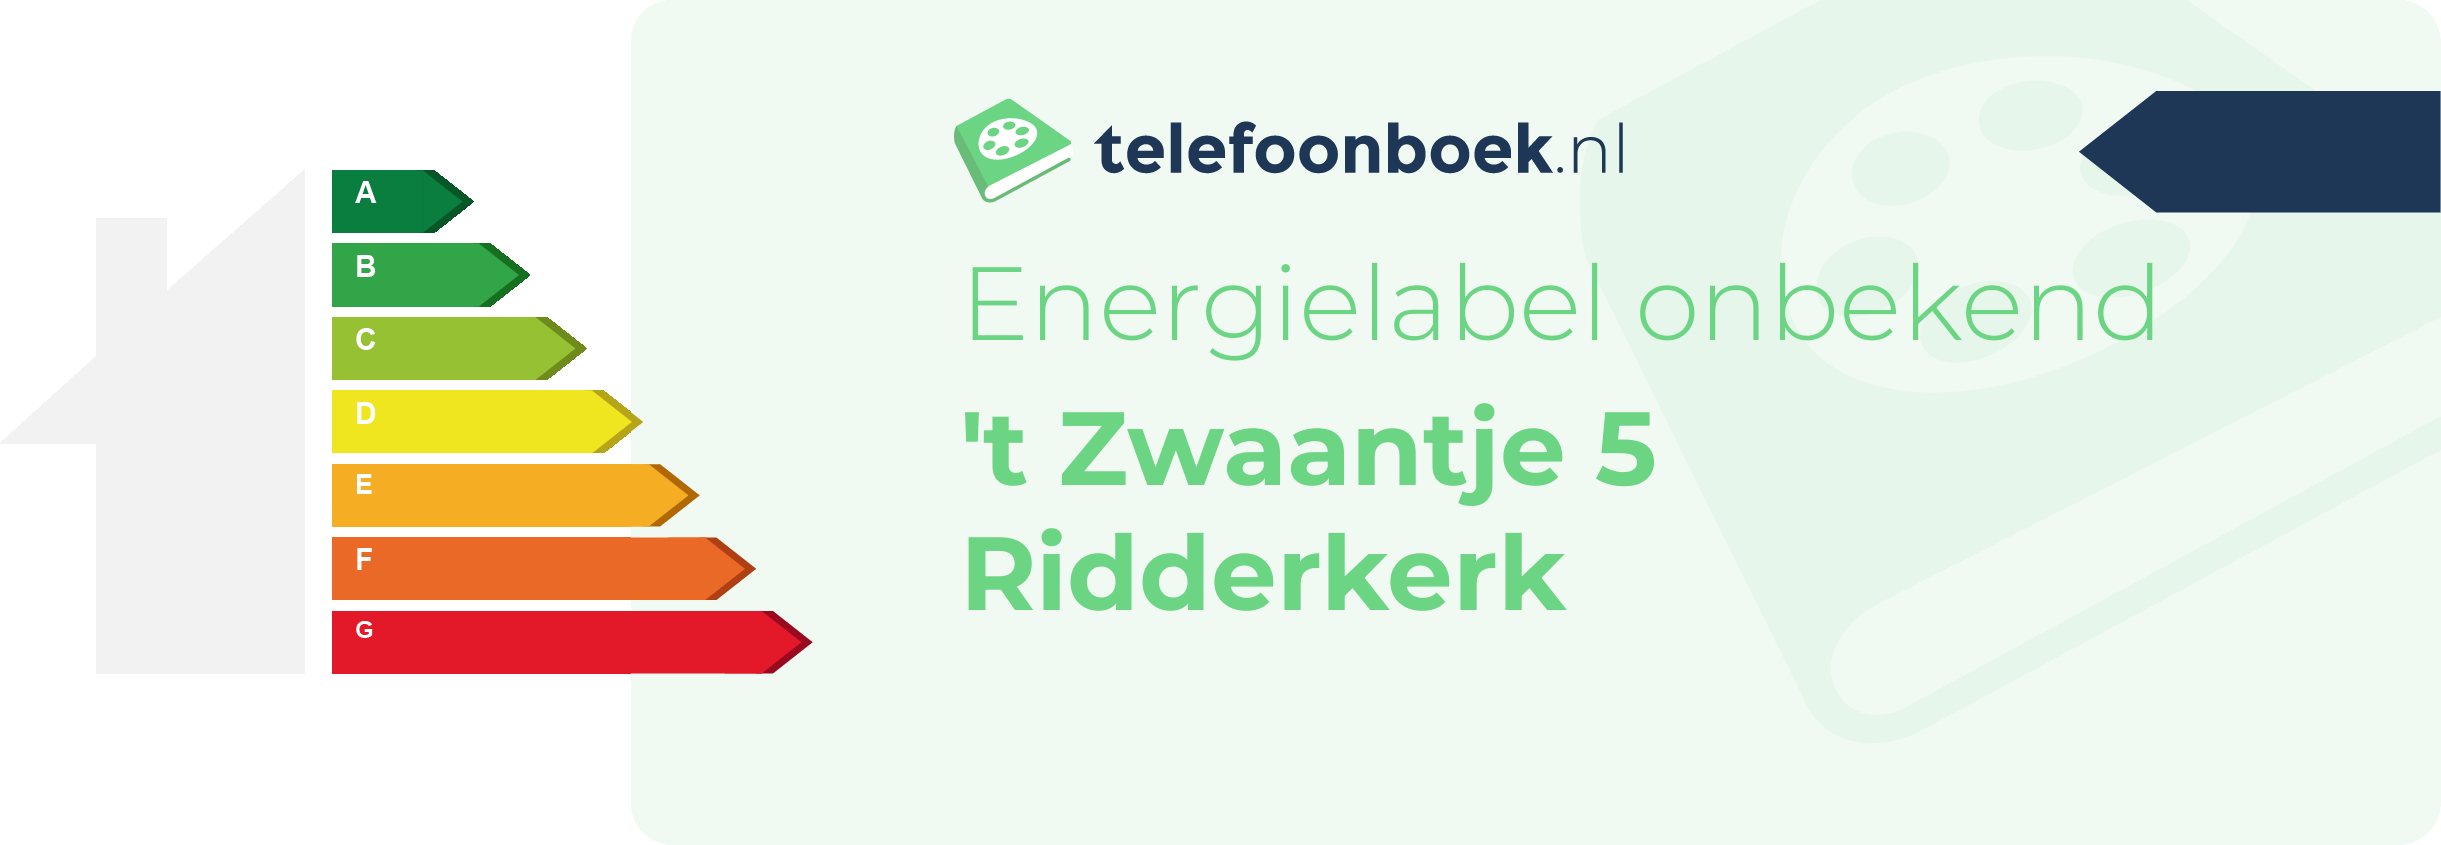 Energielabel 't Zwaantje 5 Ridderkerk